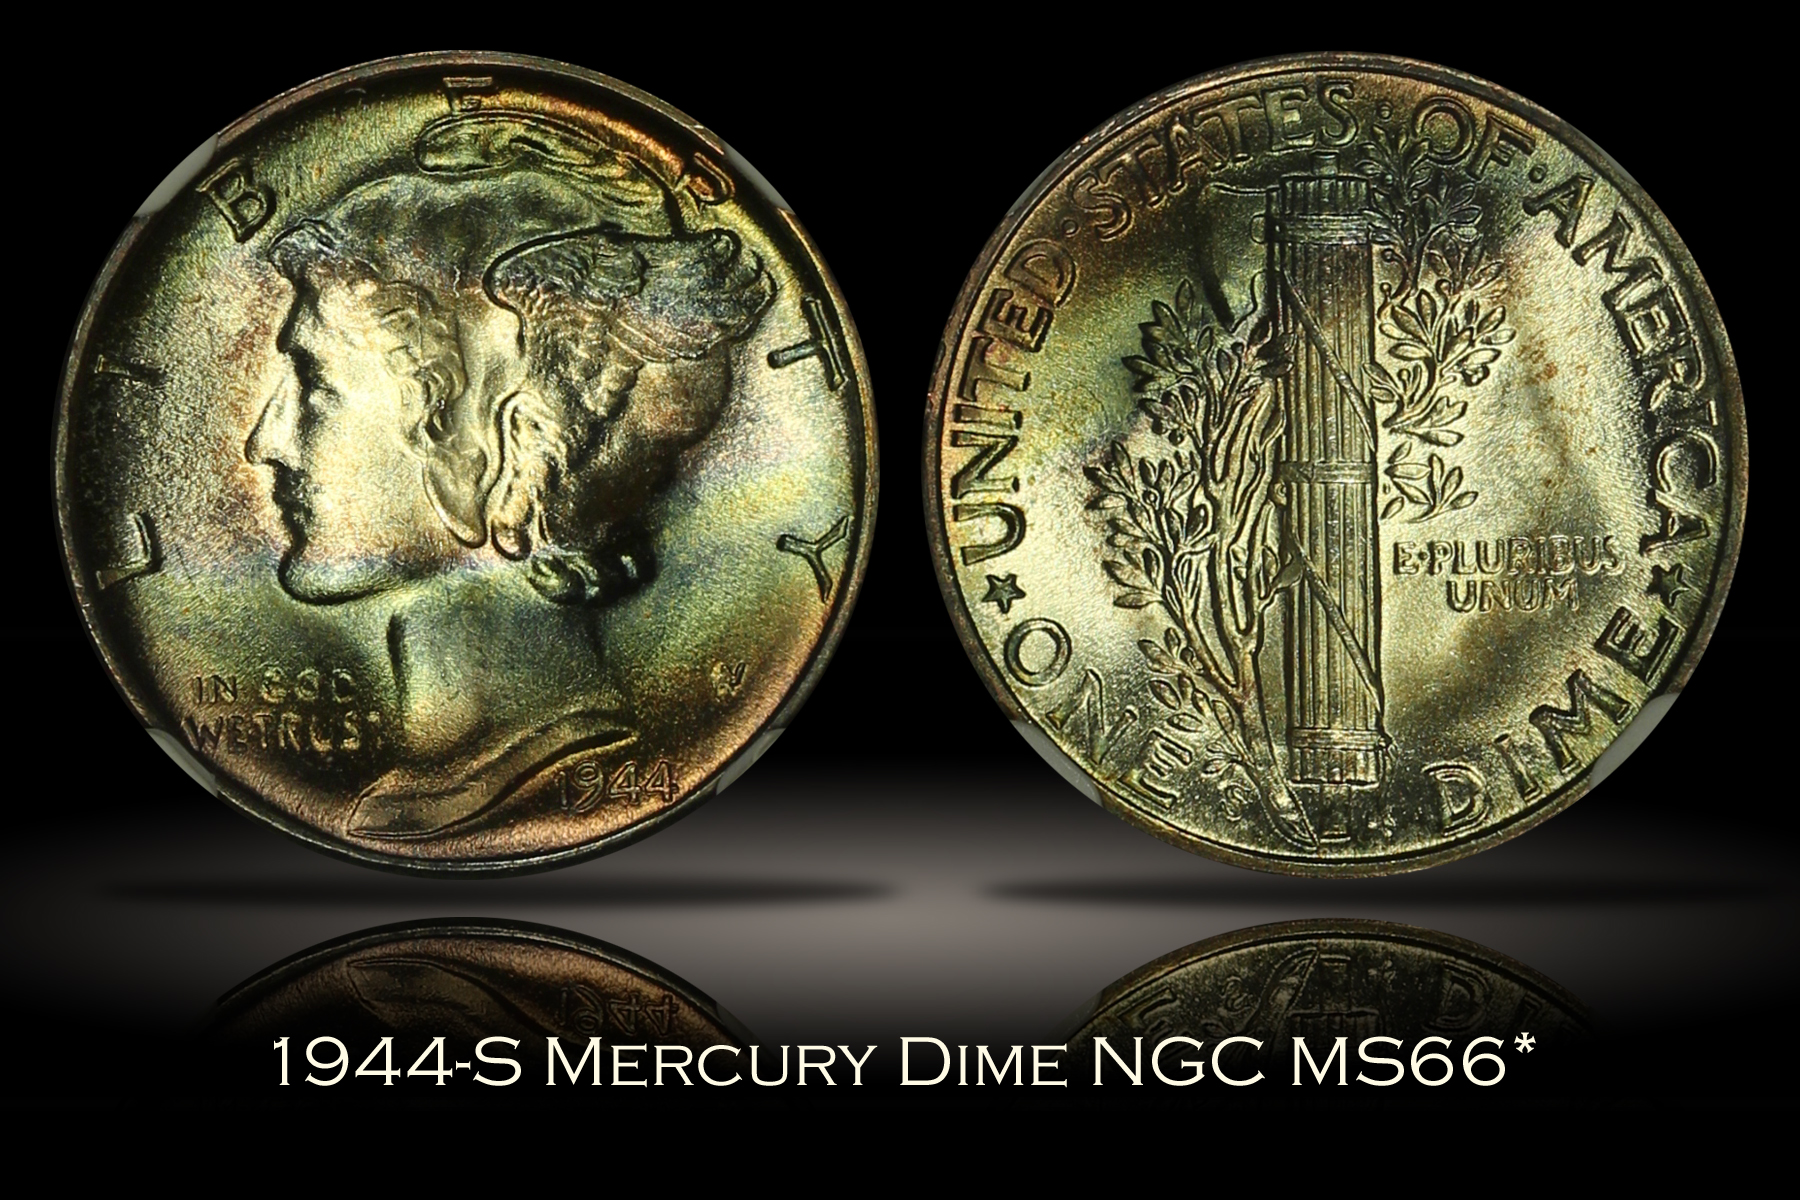 1944-S Mercury Dime NGC MS66* CAC